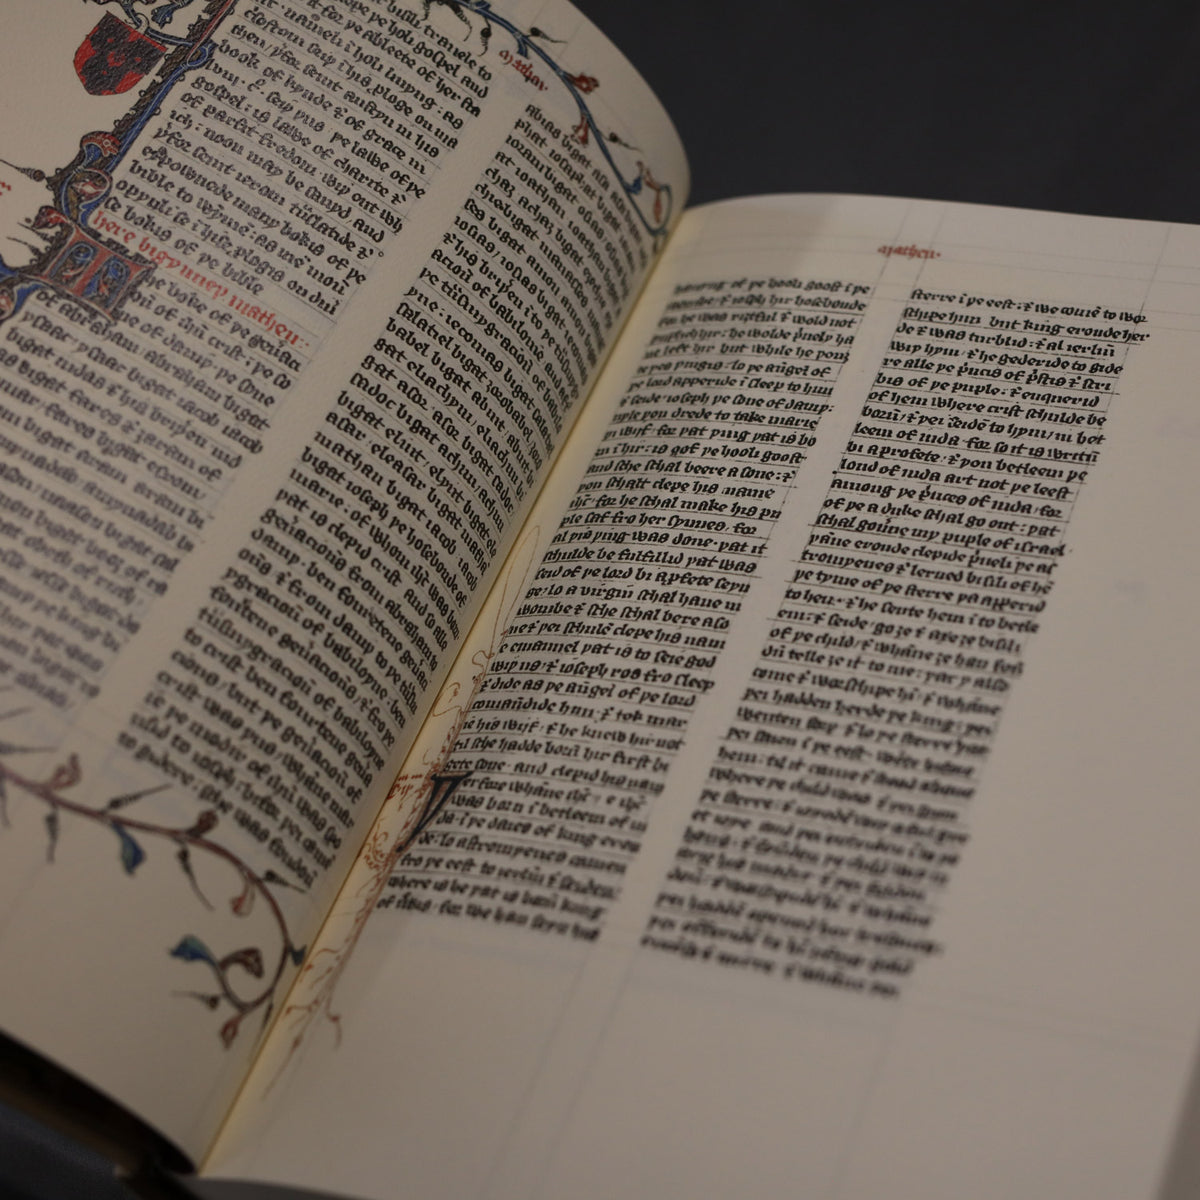 Wycliffe New Testament - 1395 Facsimile